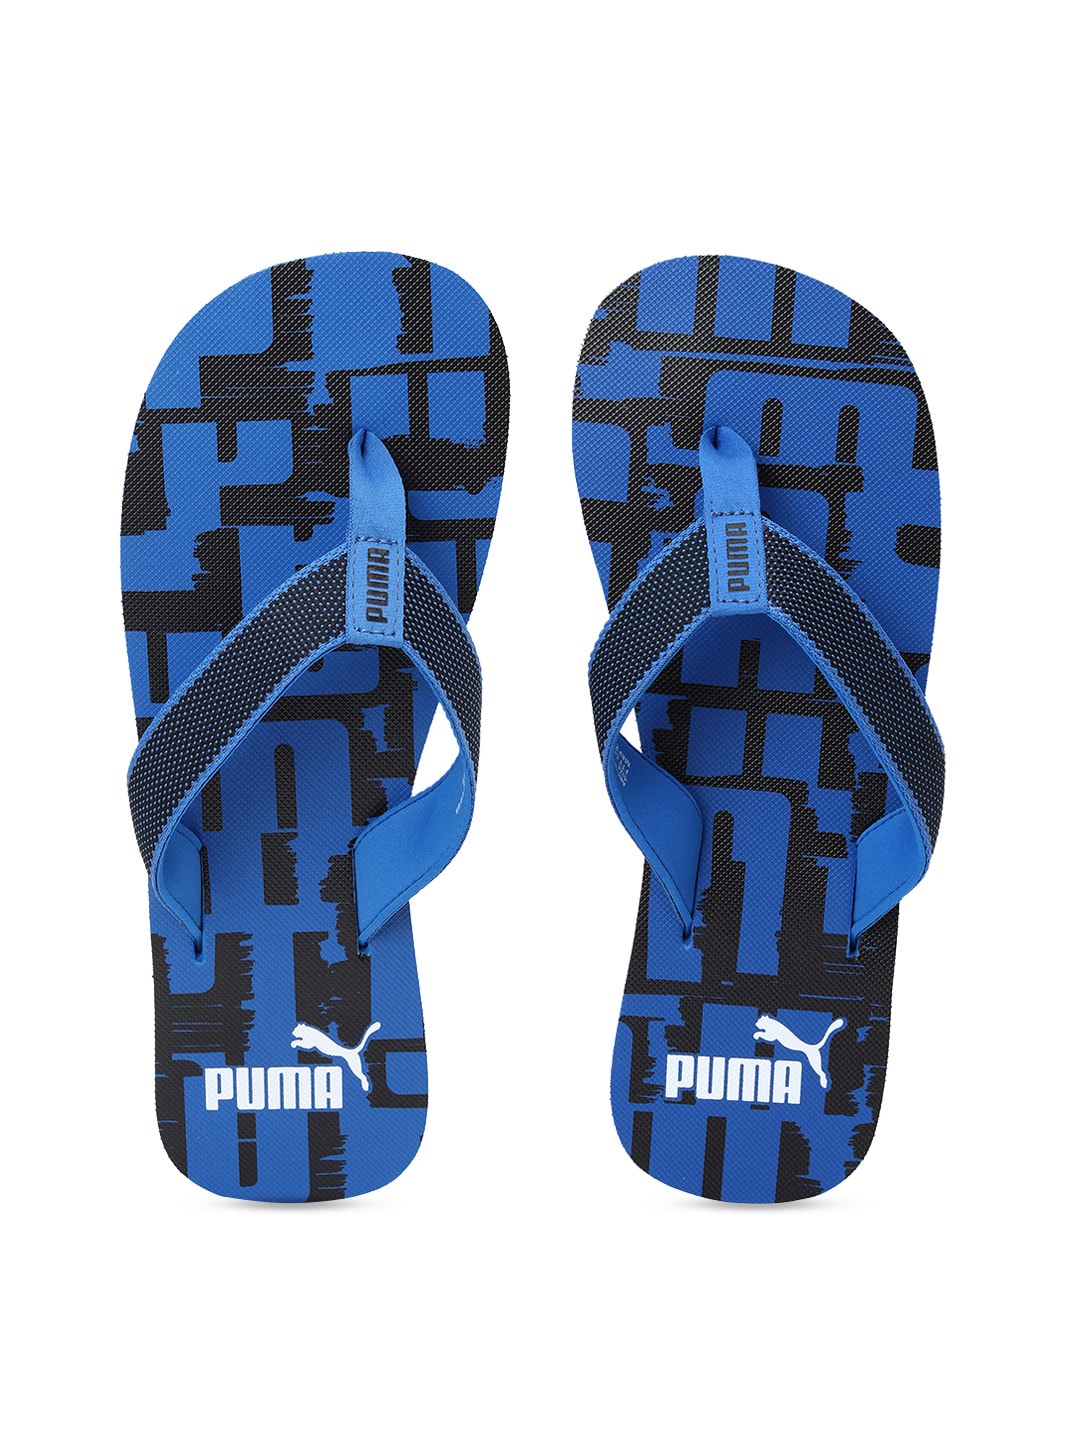 Puma Unisex Navy Blue & Black Printed Thong Flip-Flops Price in India